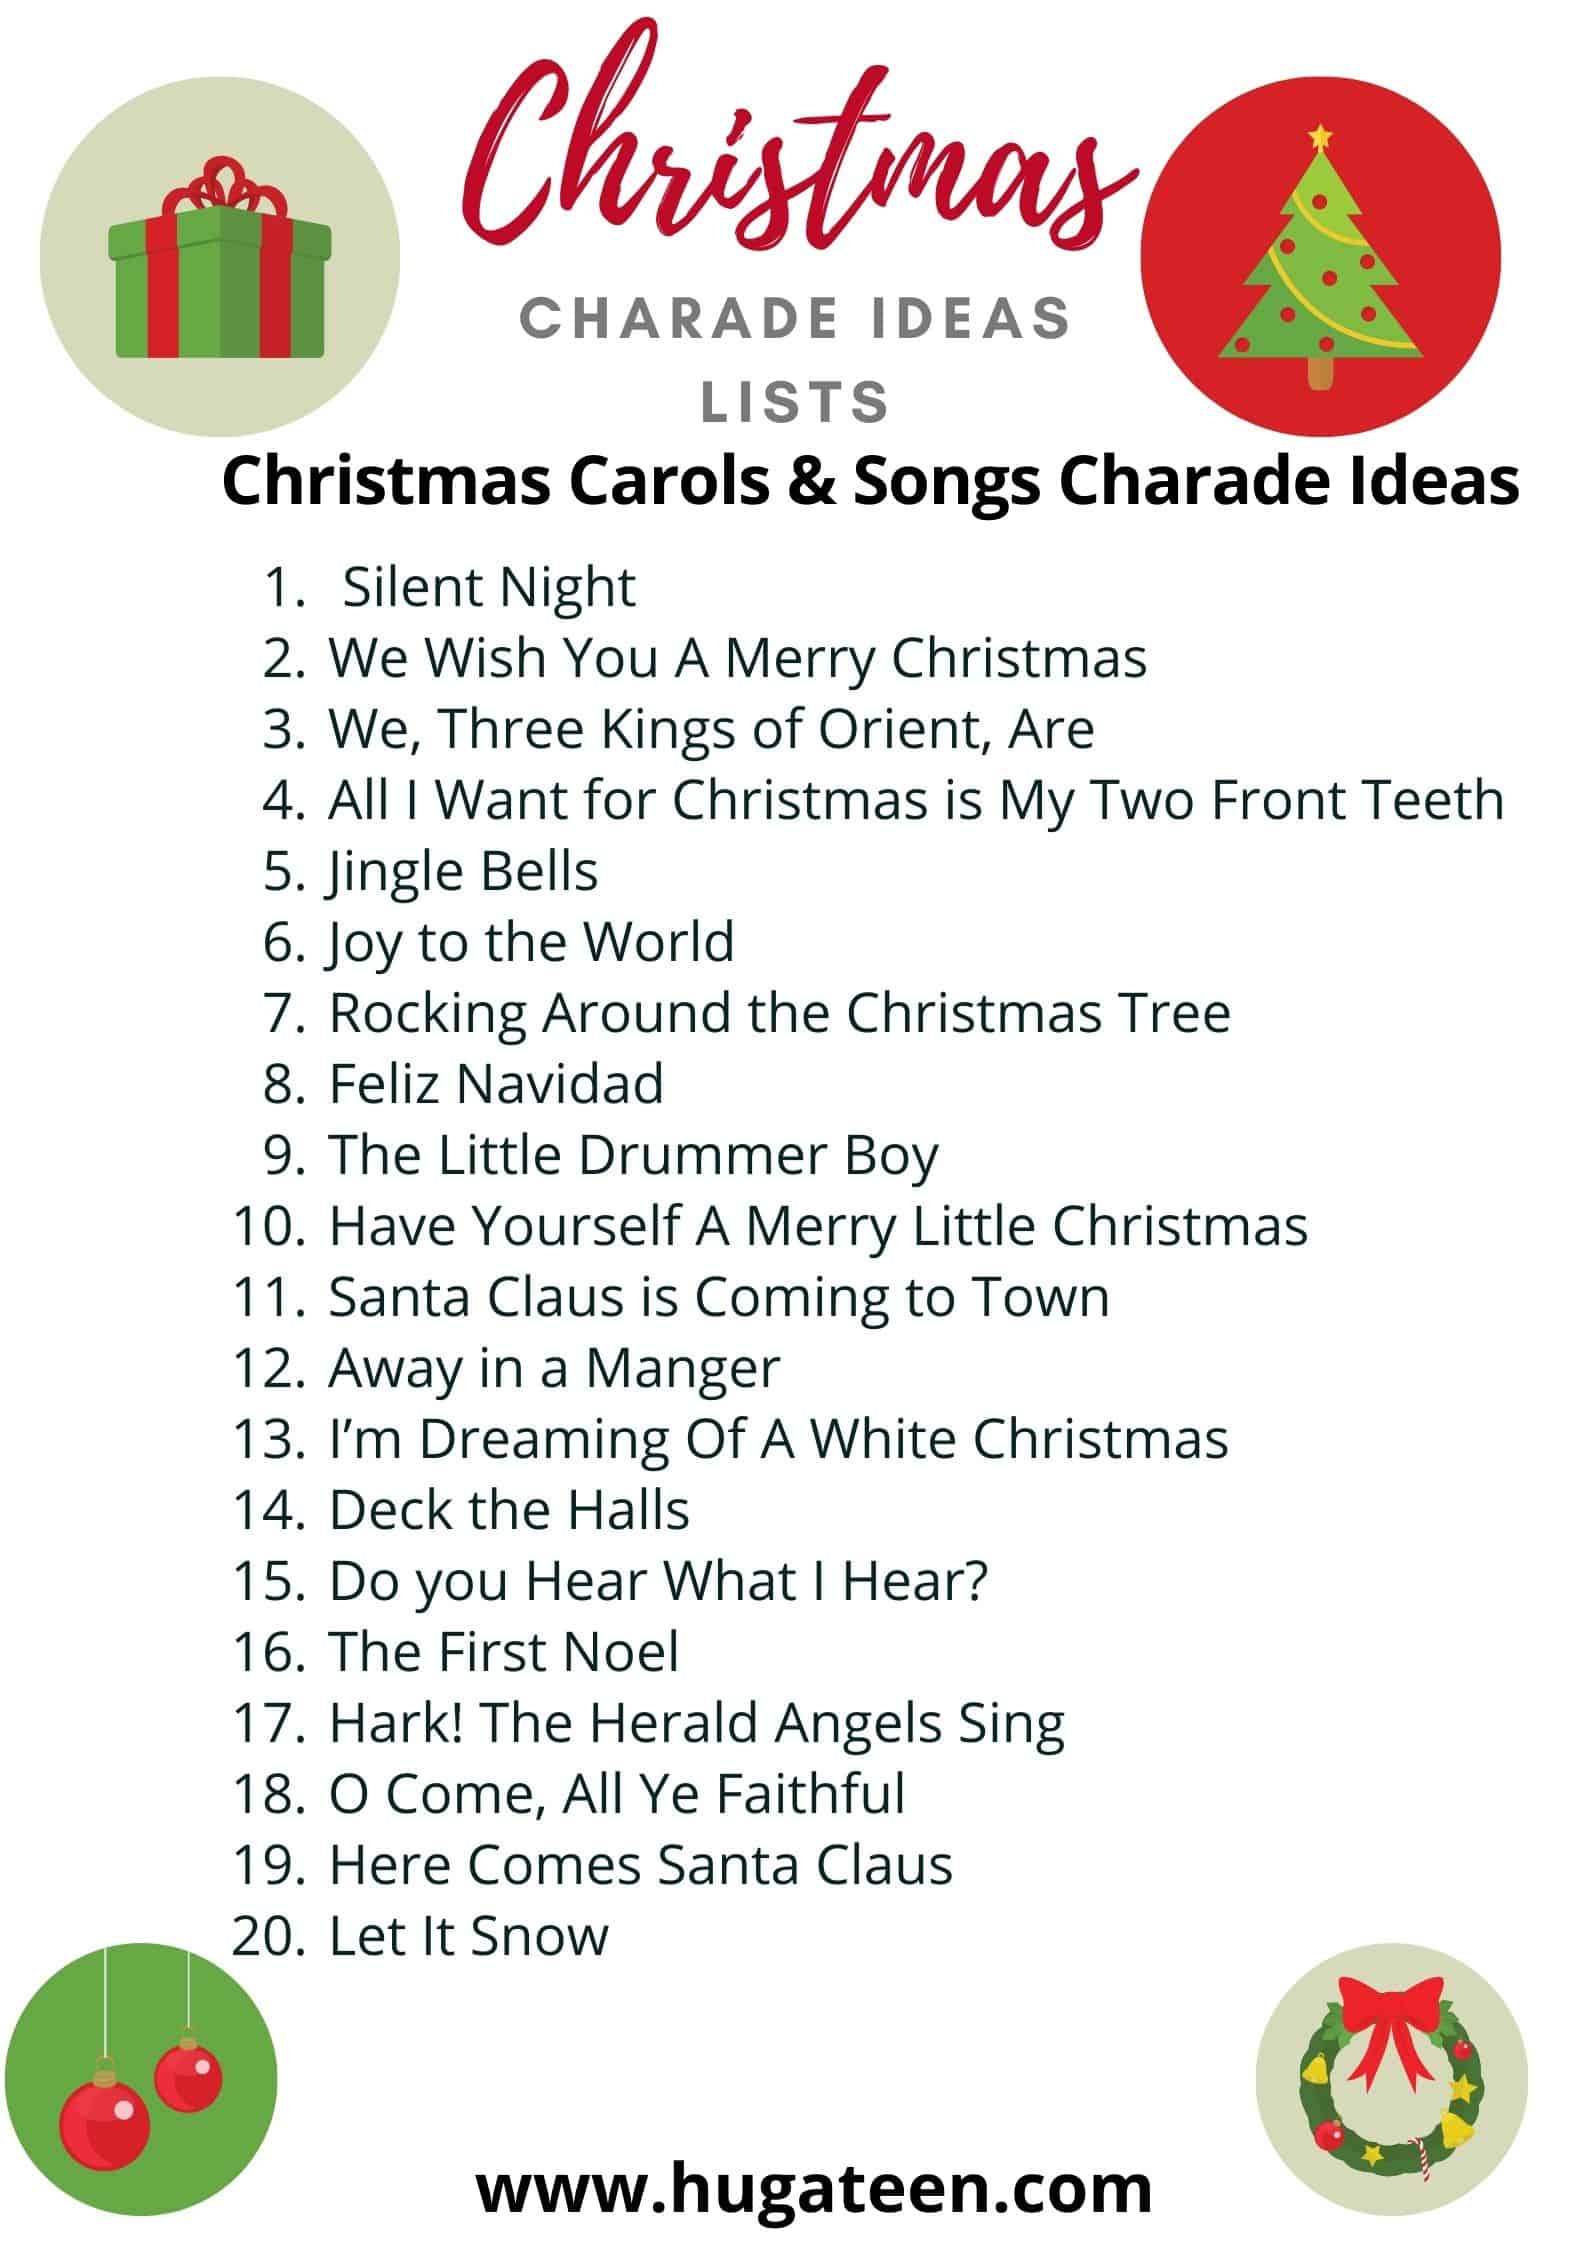 Christmas Carols & Songs Charade Ideas